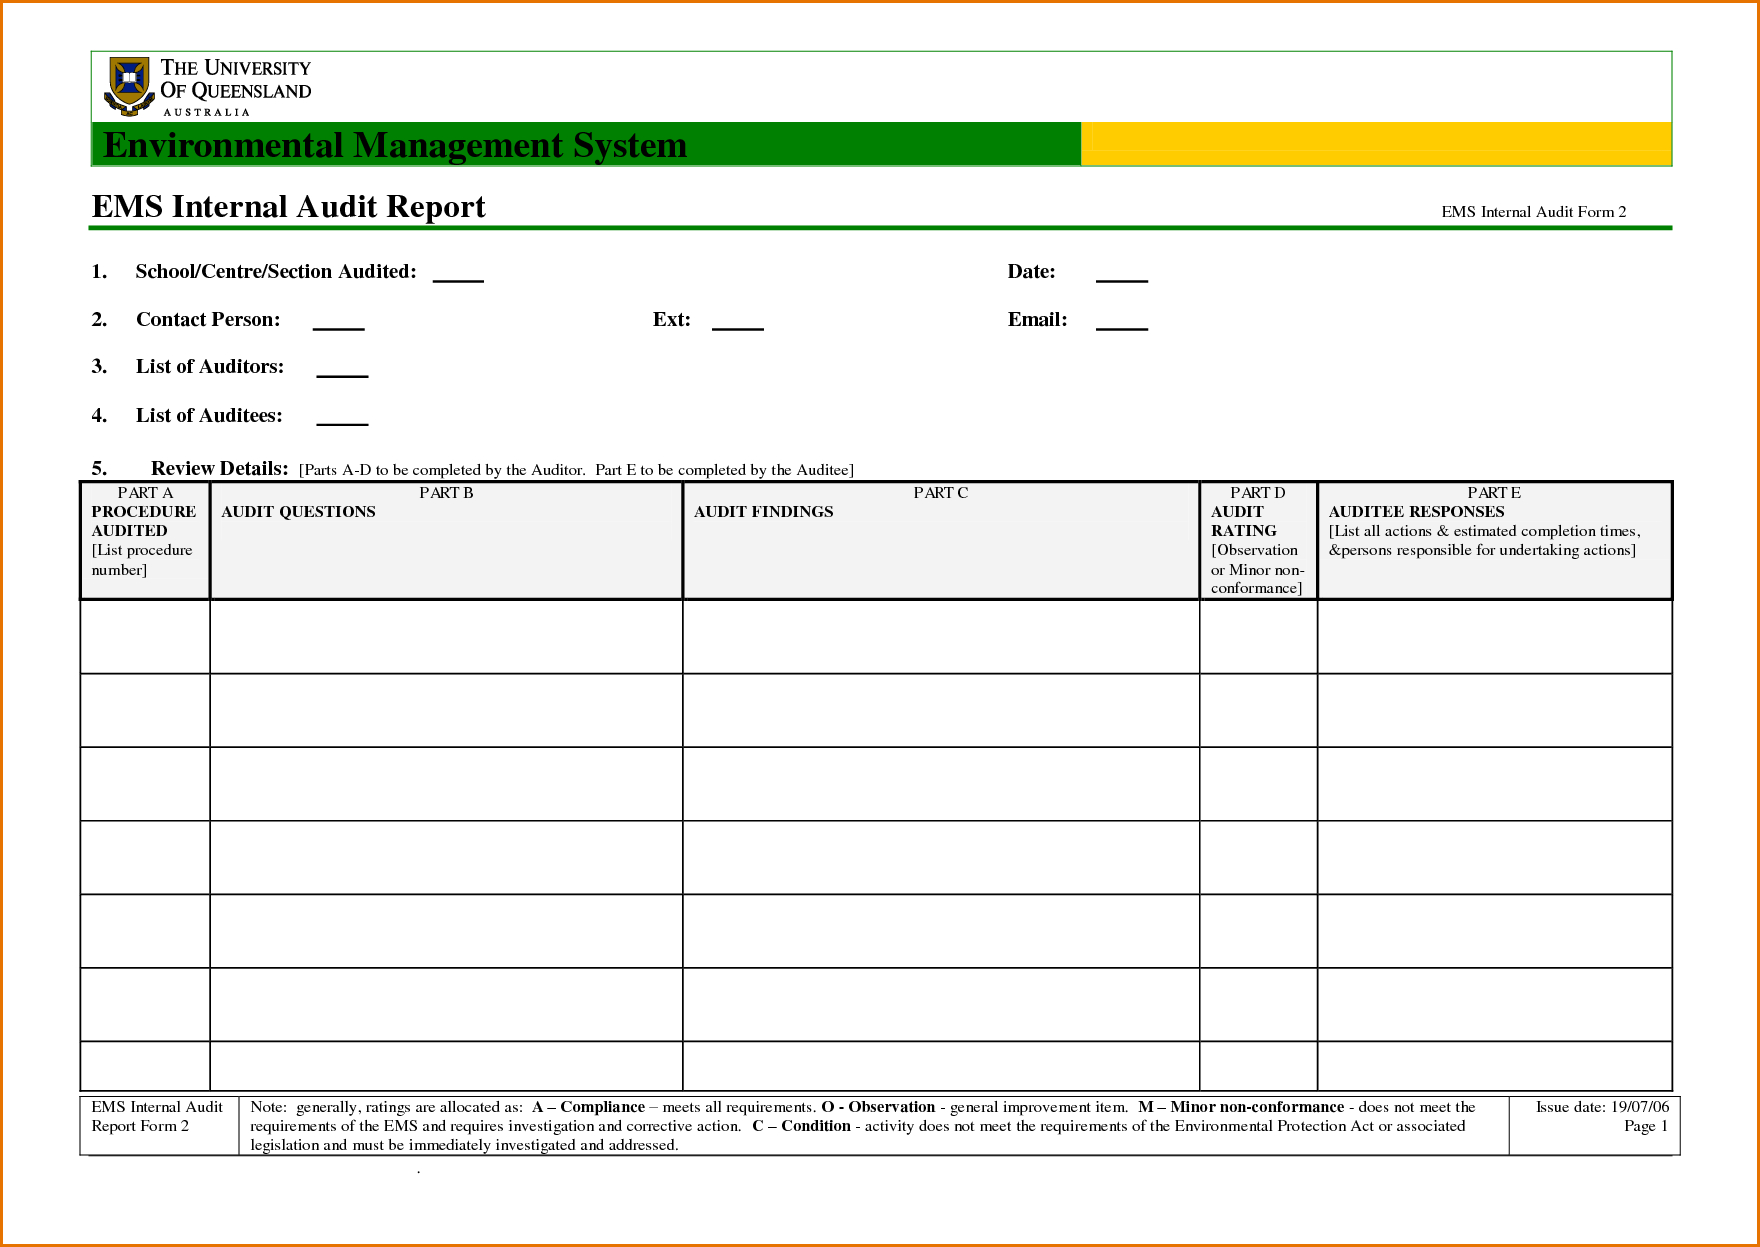 030 Internal Audit Report Template Stupendous Ideas Format In Iso 9001 Internal Audit Report Template